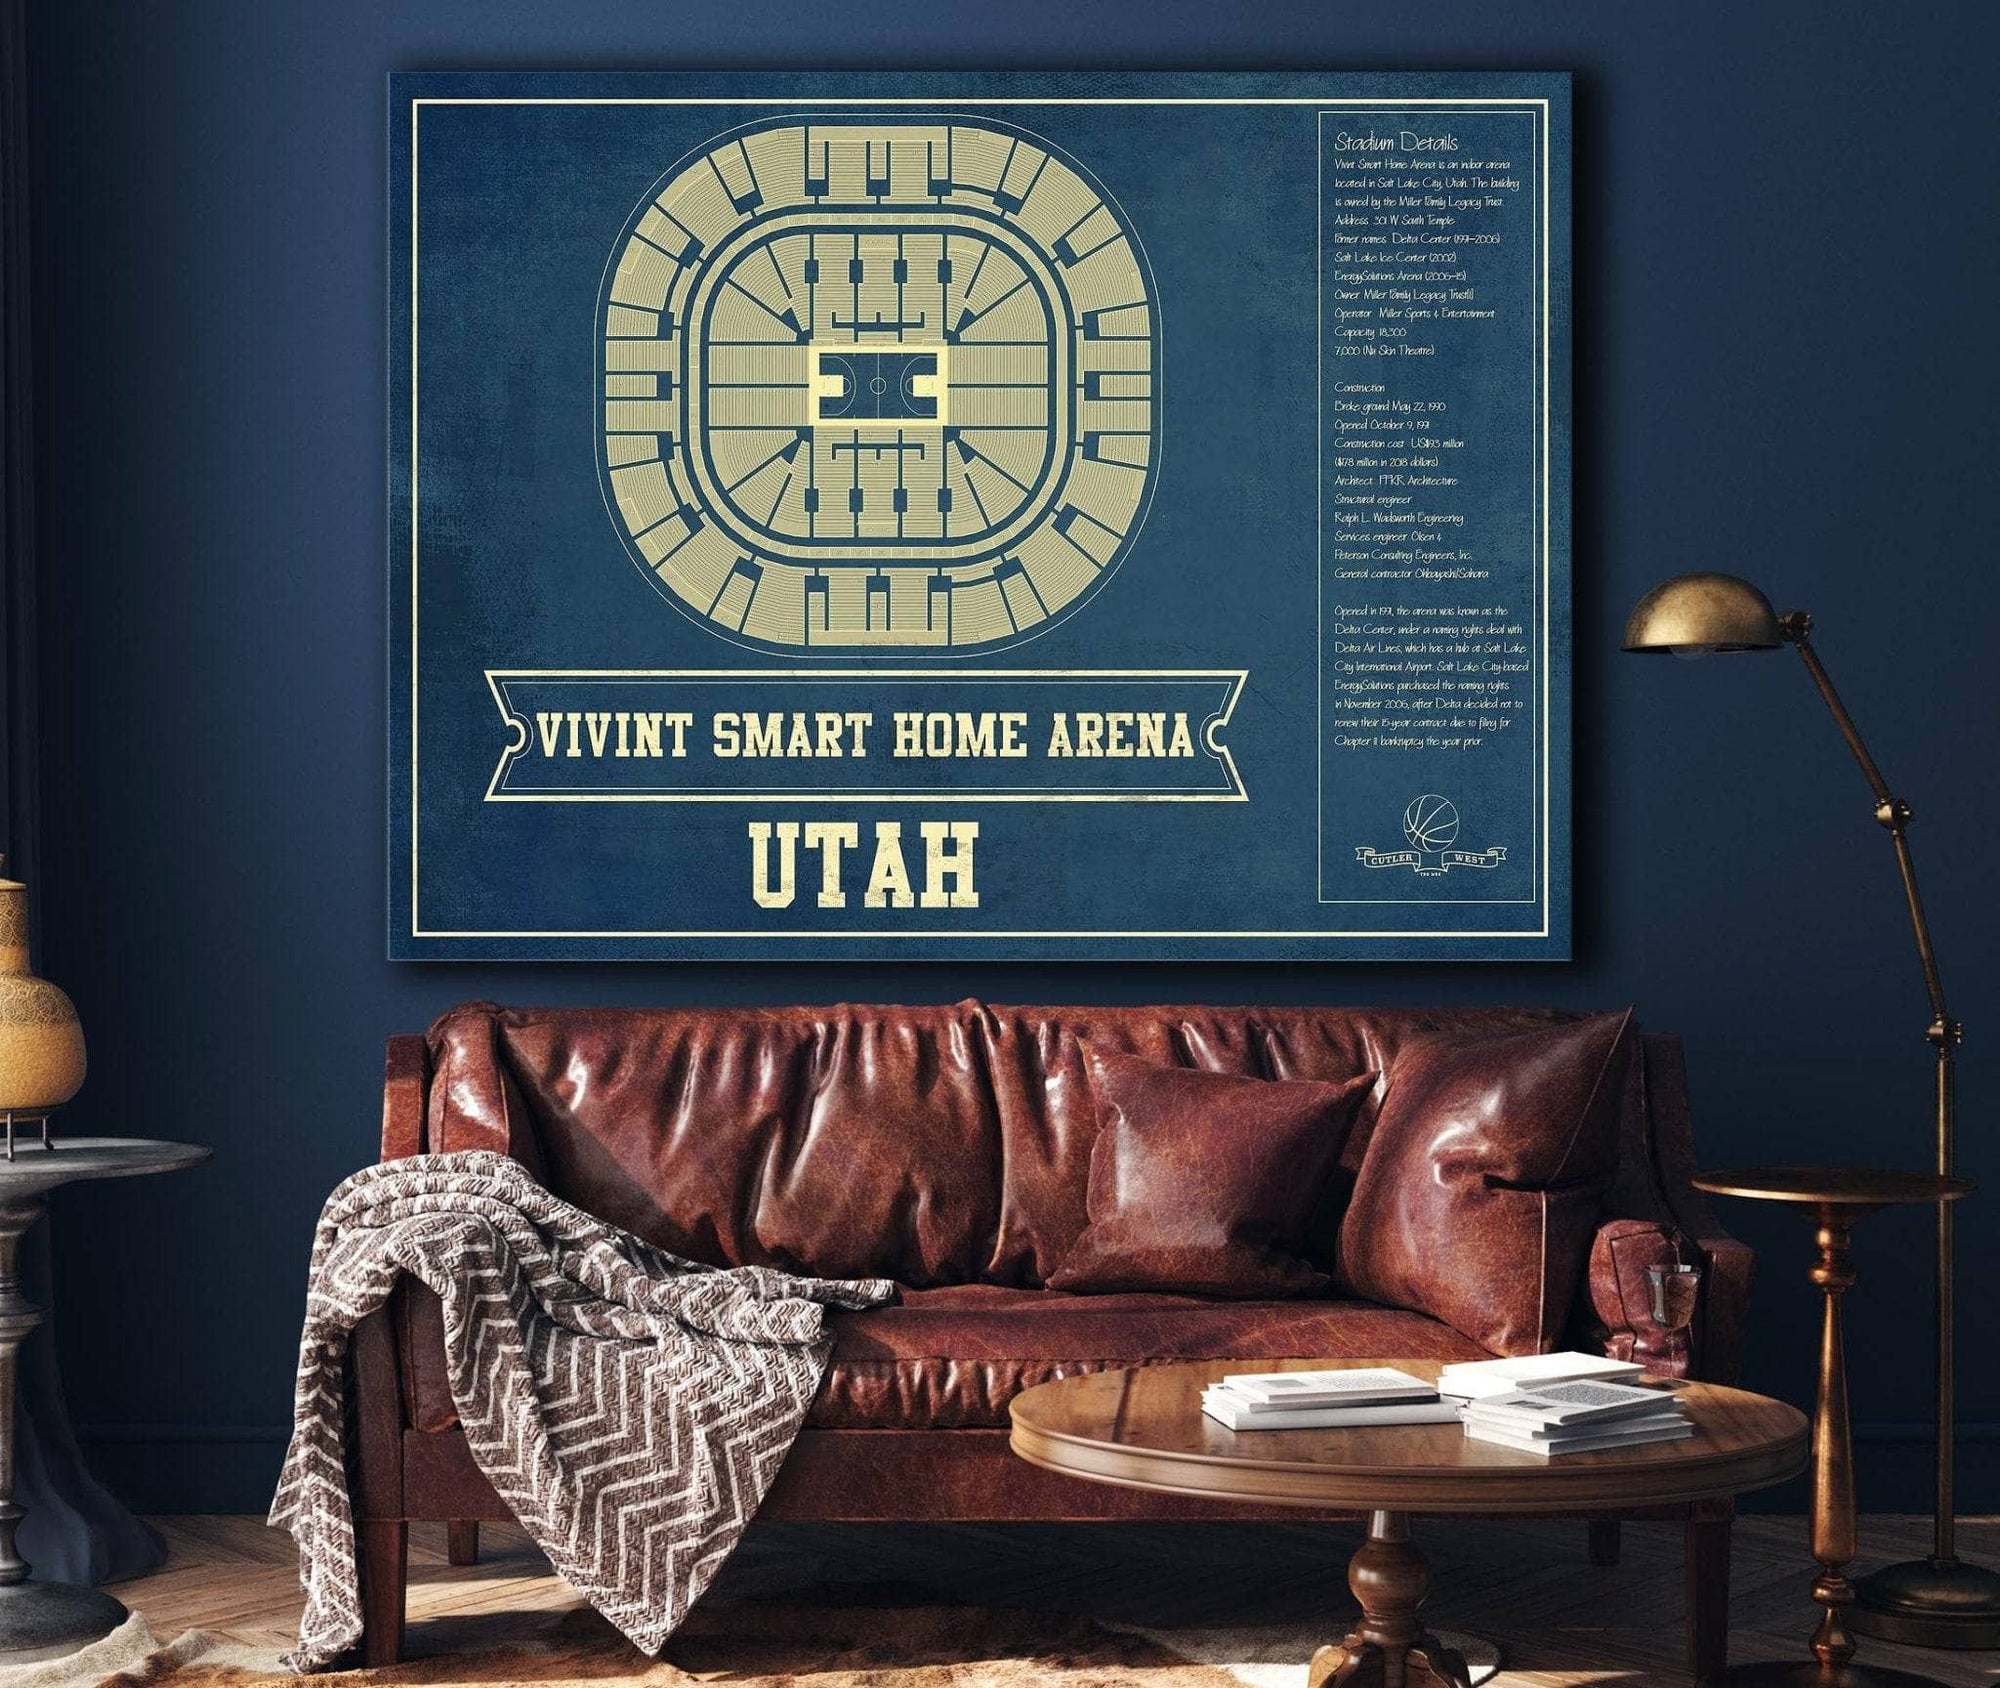 Cutler West Basketball Collection Utah Jazz - Vivint Smart Home Arena Seating Chart Vintage Art Print